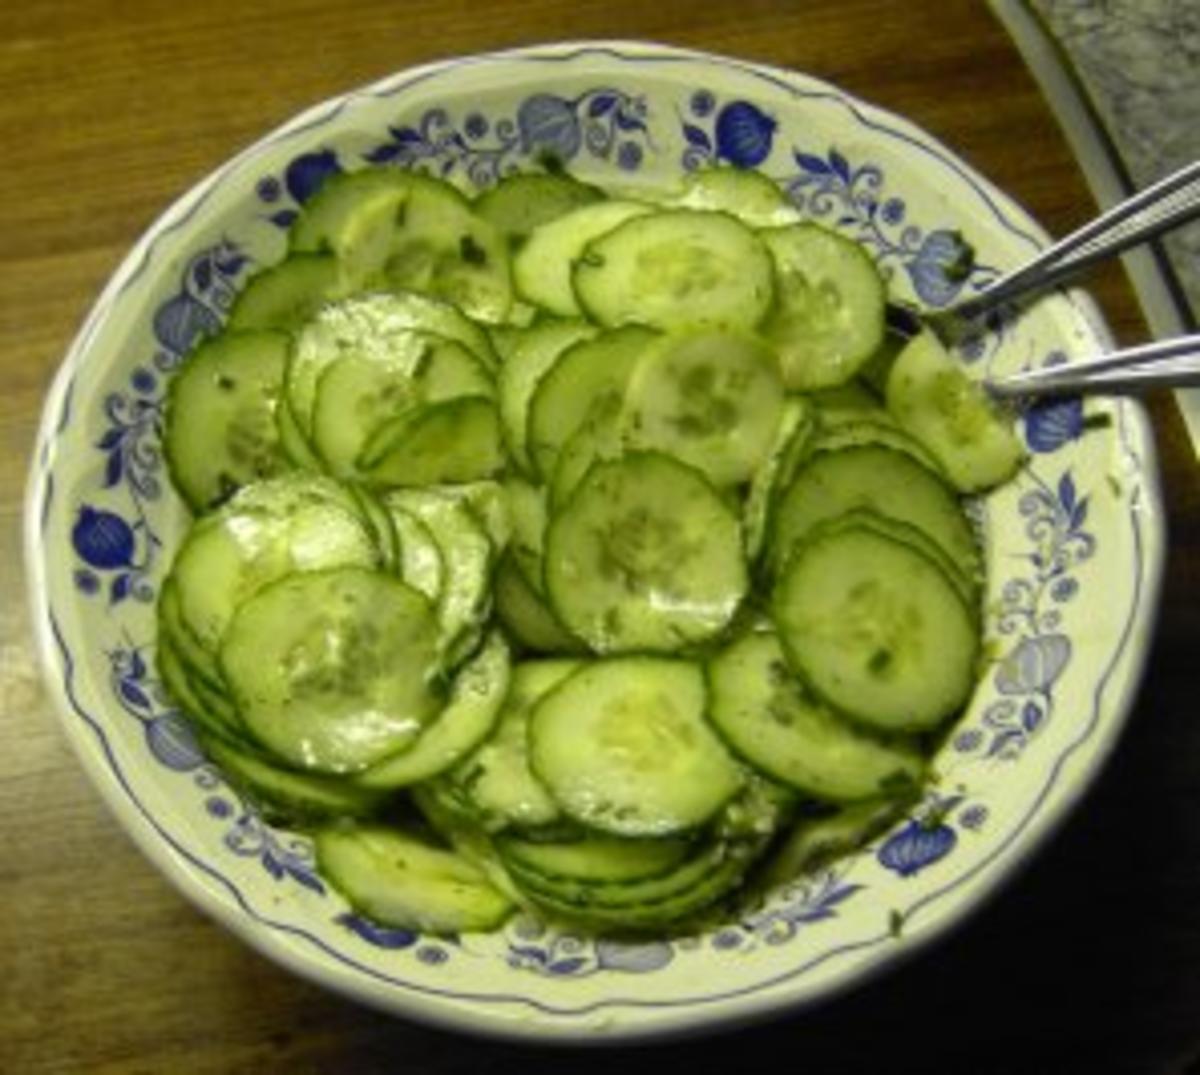 Gurkensalat mit Salatgurke und Olivenöl - Rezept mit Bild - kochbar.de